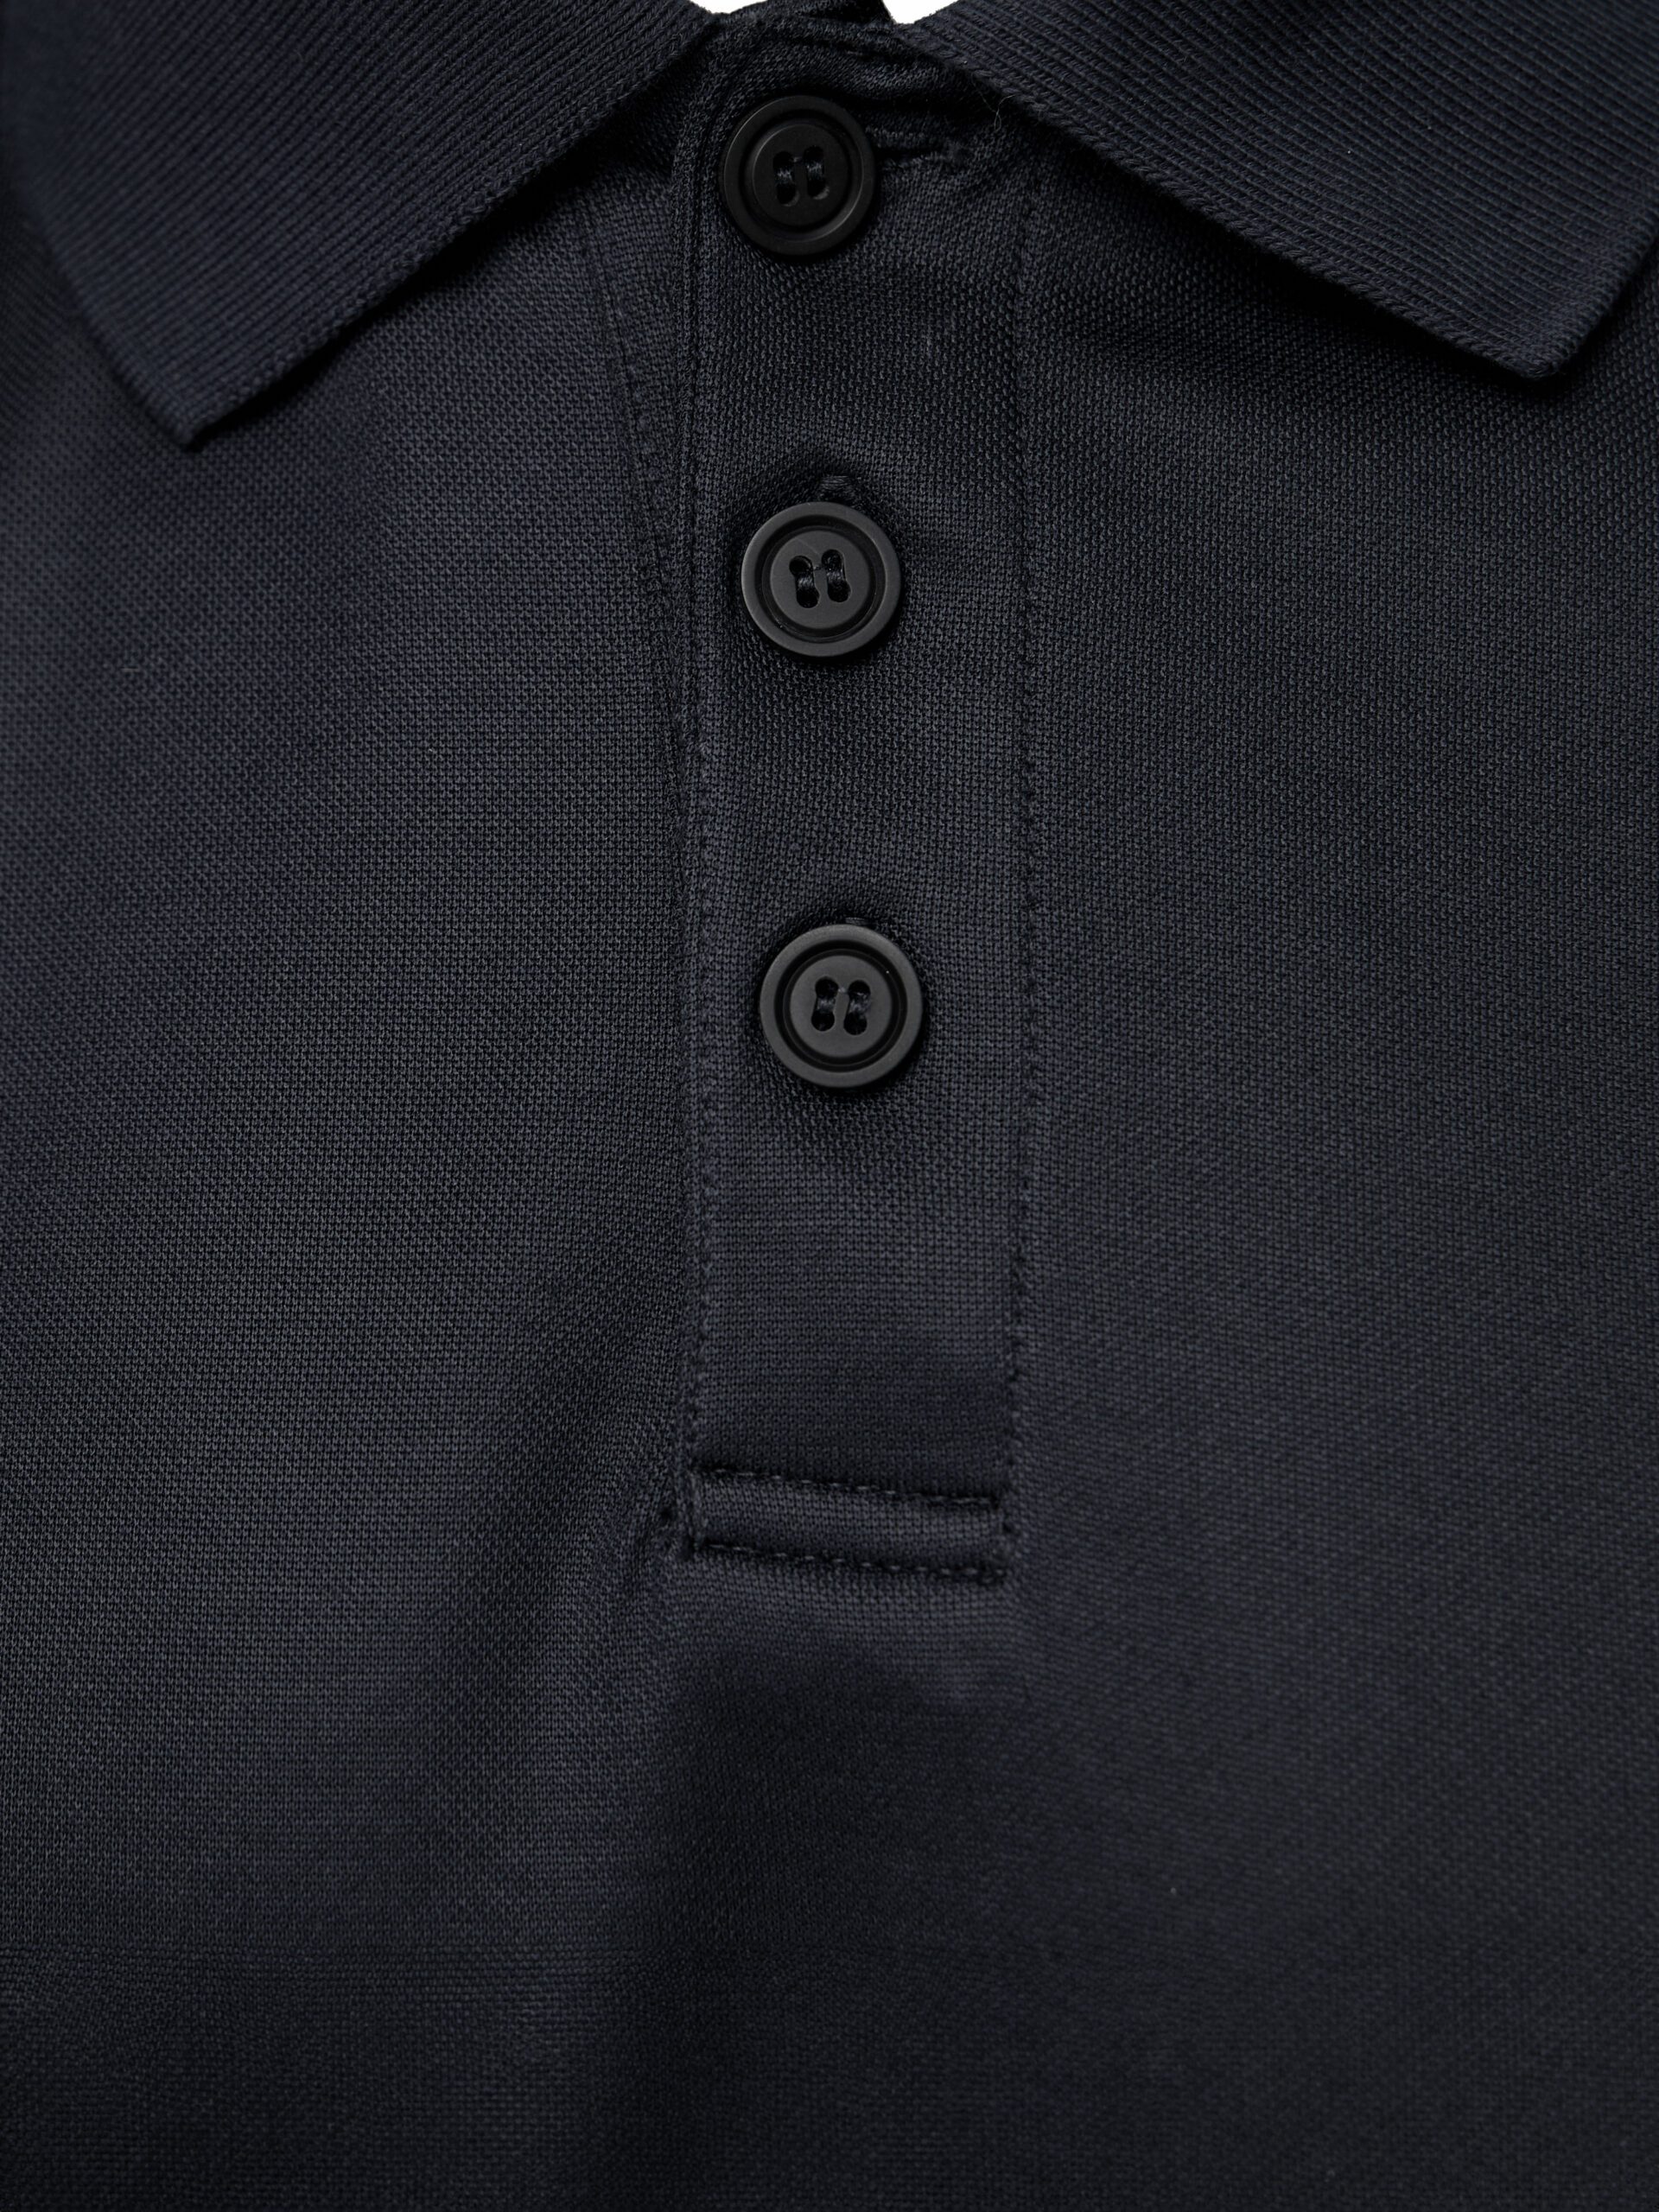 PUMA Workwear Essentials Men\'s Polo Shirt | PUMA Workwear | Poloshirts